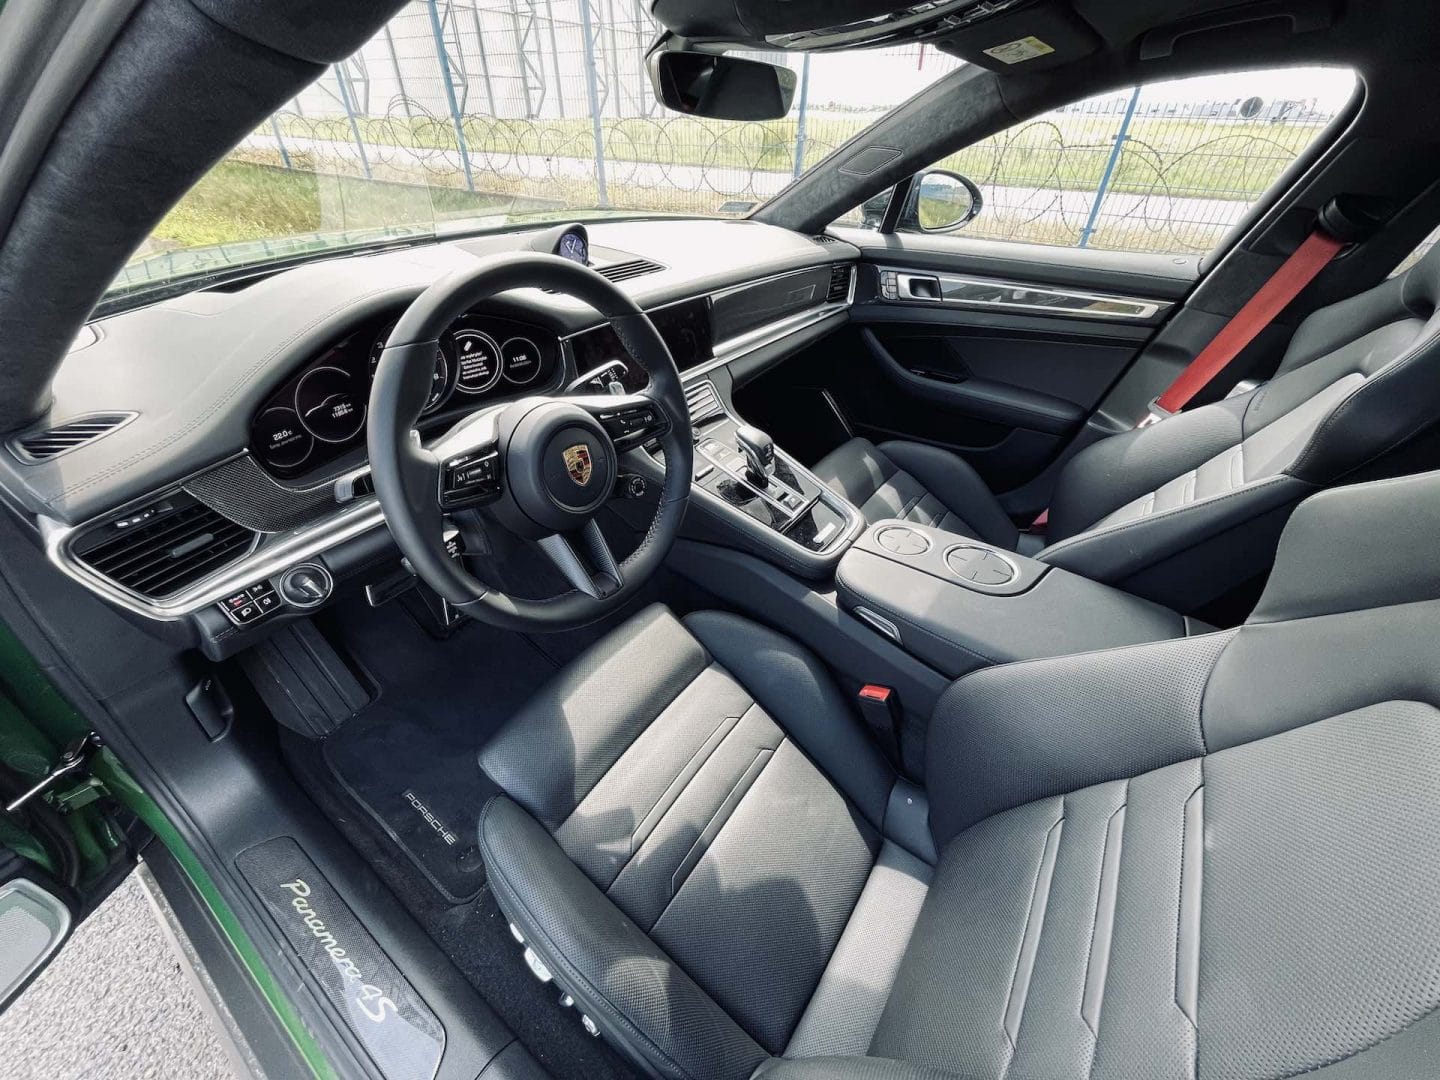 Test Porsche Panamera 4S E-Hybrid – szybko i oszczędnie